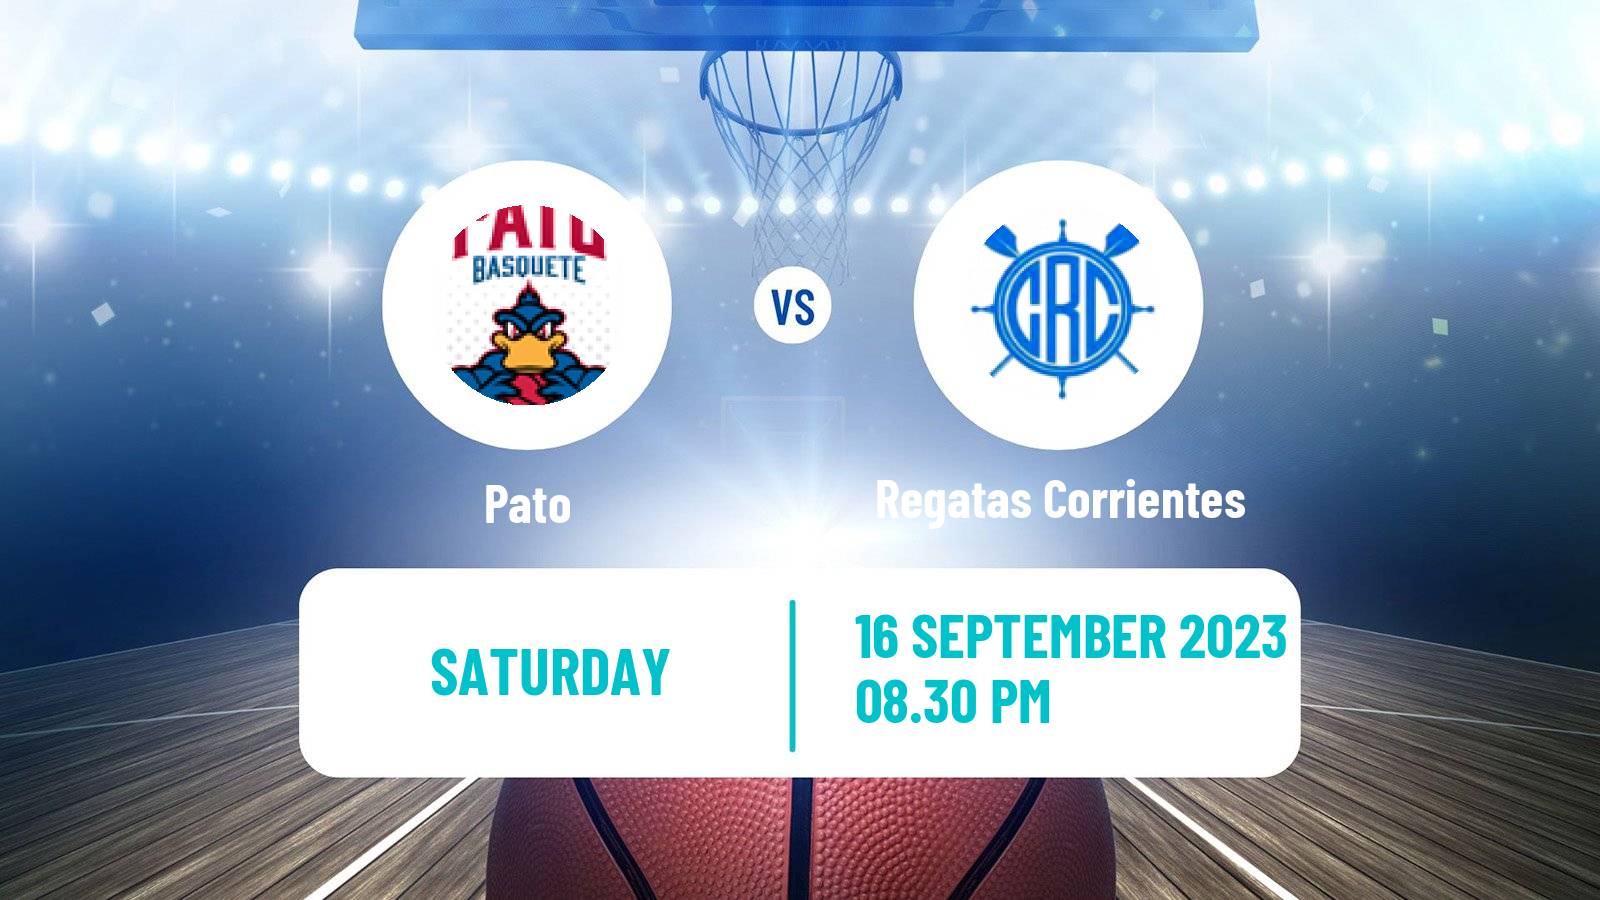 Basketball Club Friendly Basketball Pato - Regatas Corrientes